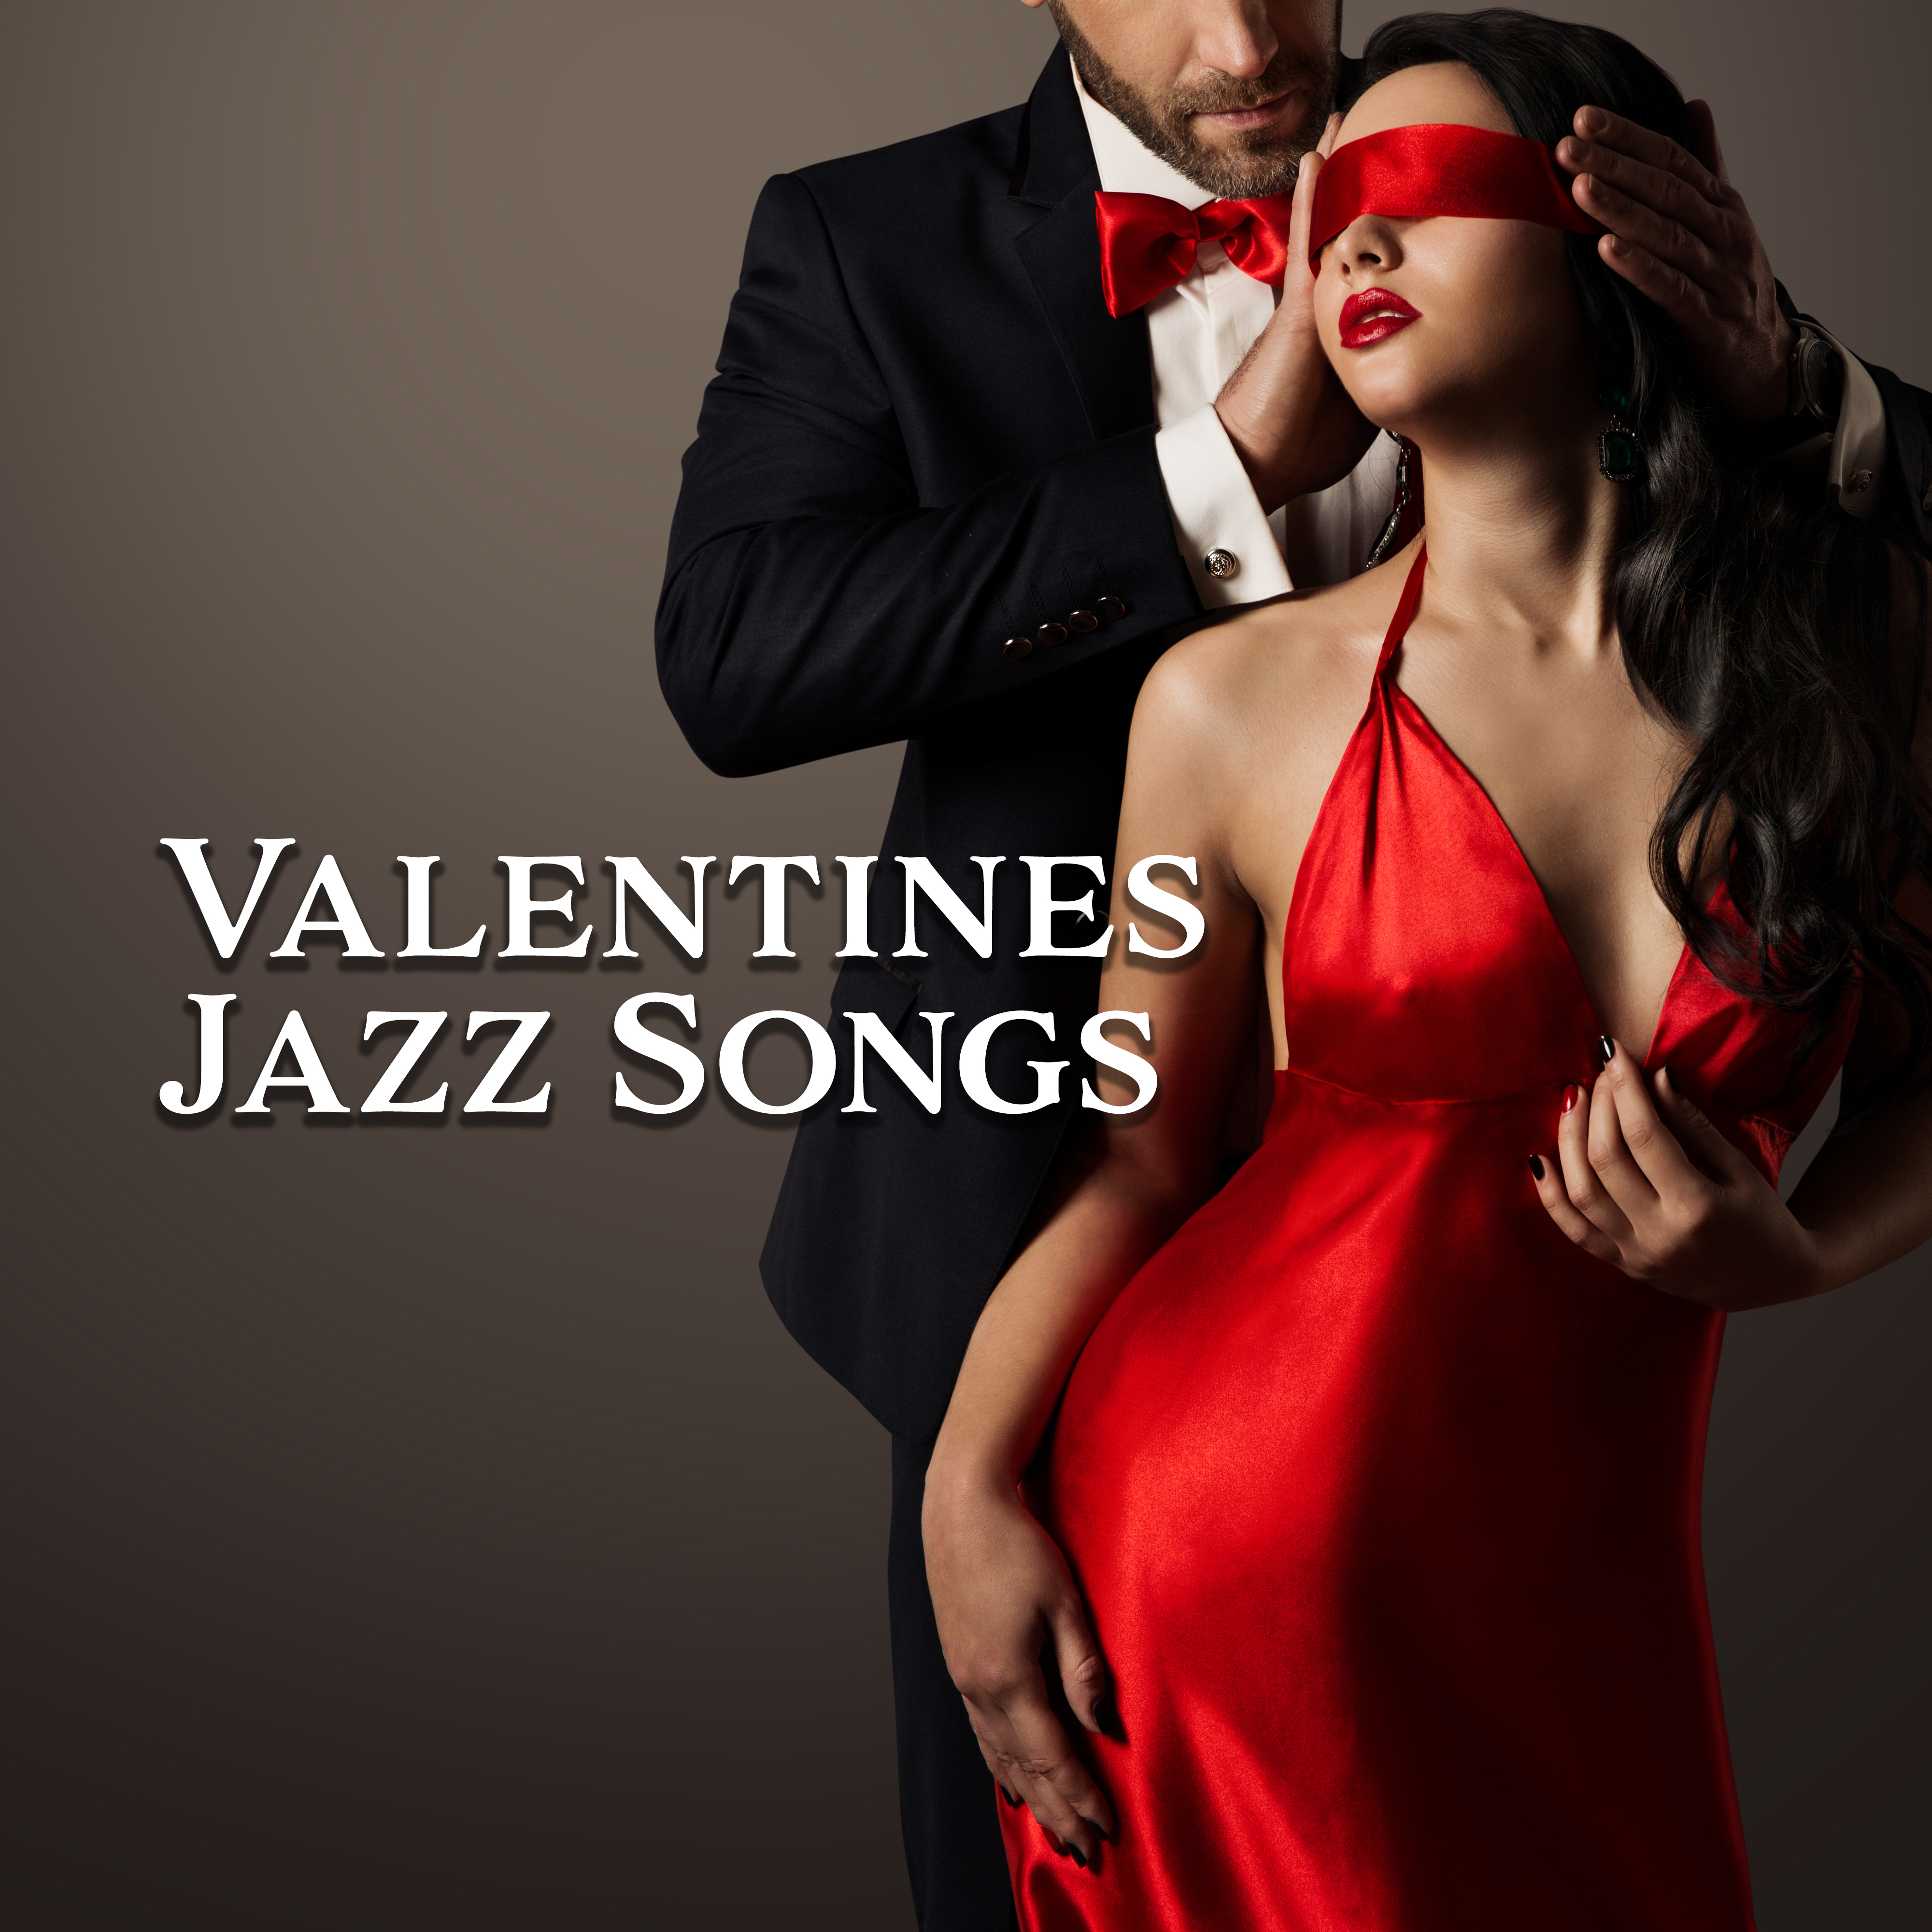 Valentines Jazz Songs – Romantic Jazz Music, Sensual Melodies, Erotic Jazz at Night, Love Songs, Jazz Music Ambient, *** Music 2019